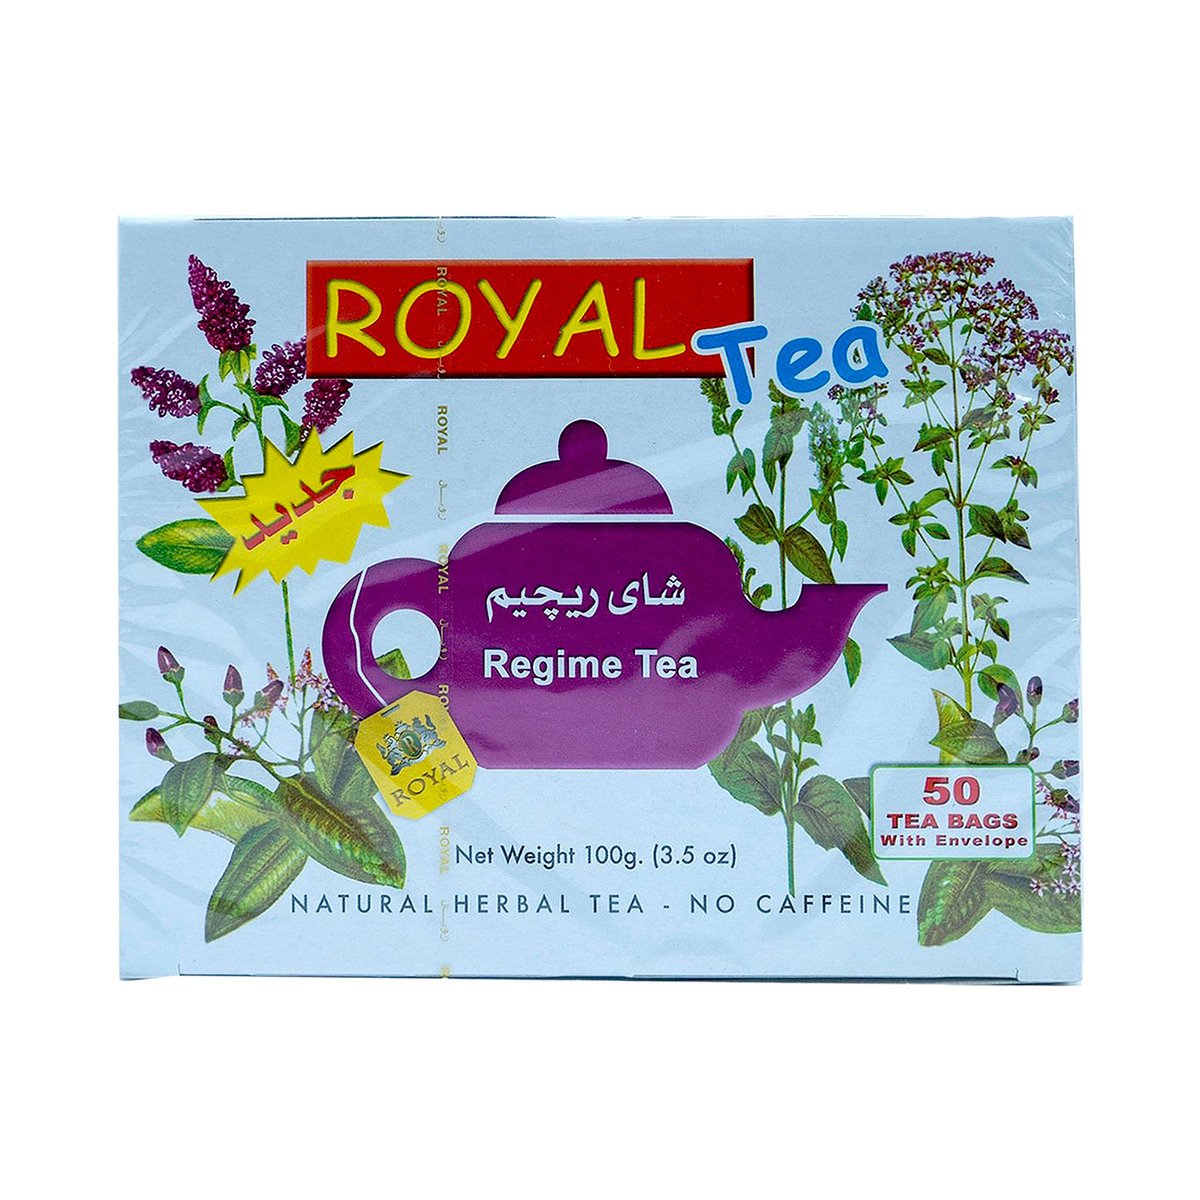 Royal Regime Tea 50 pcs 100 g